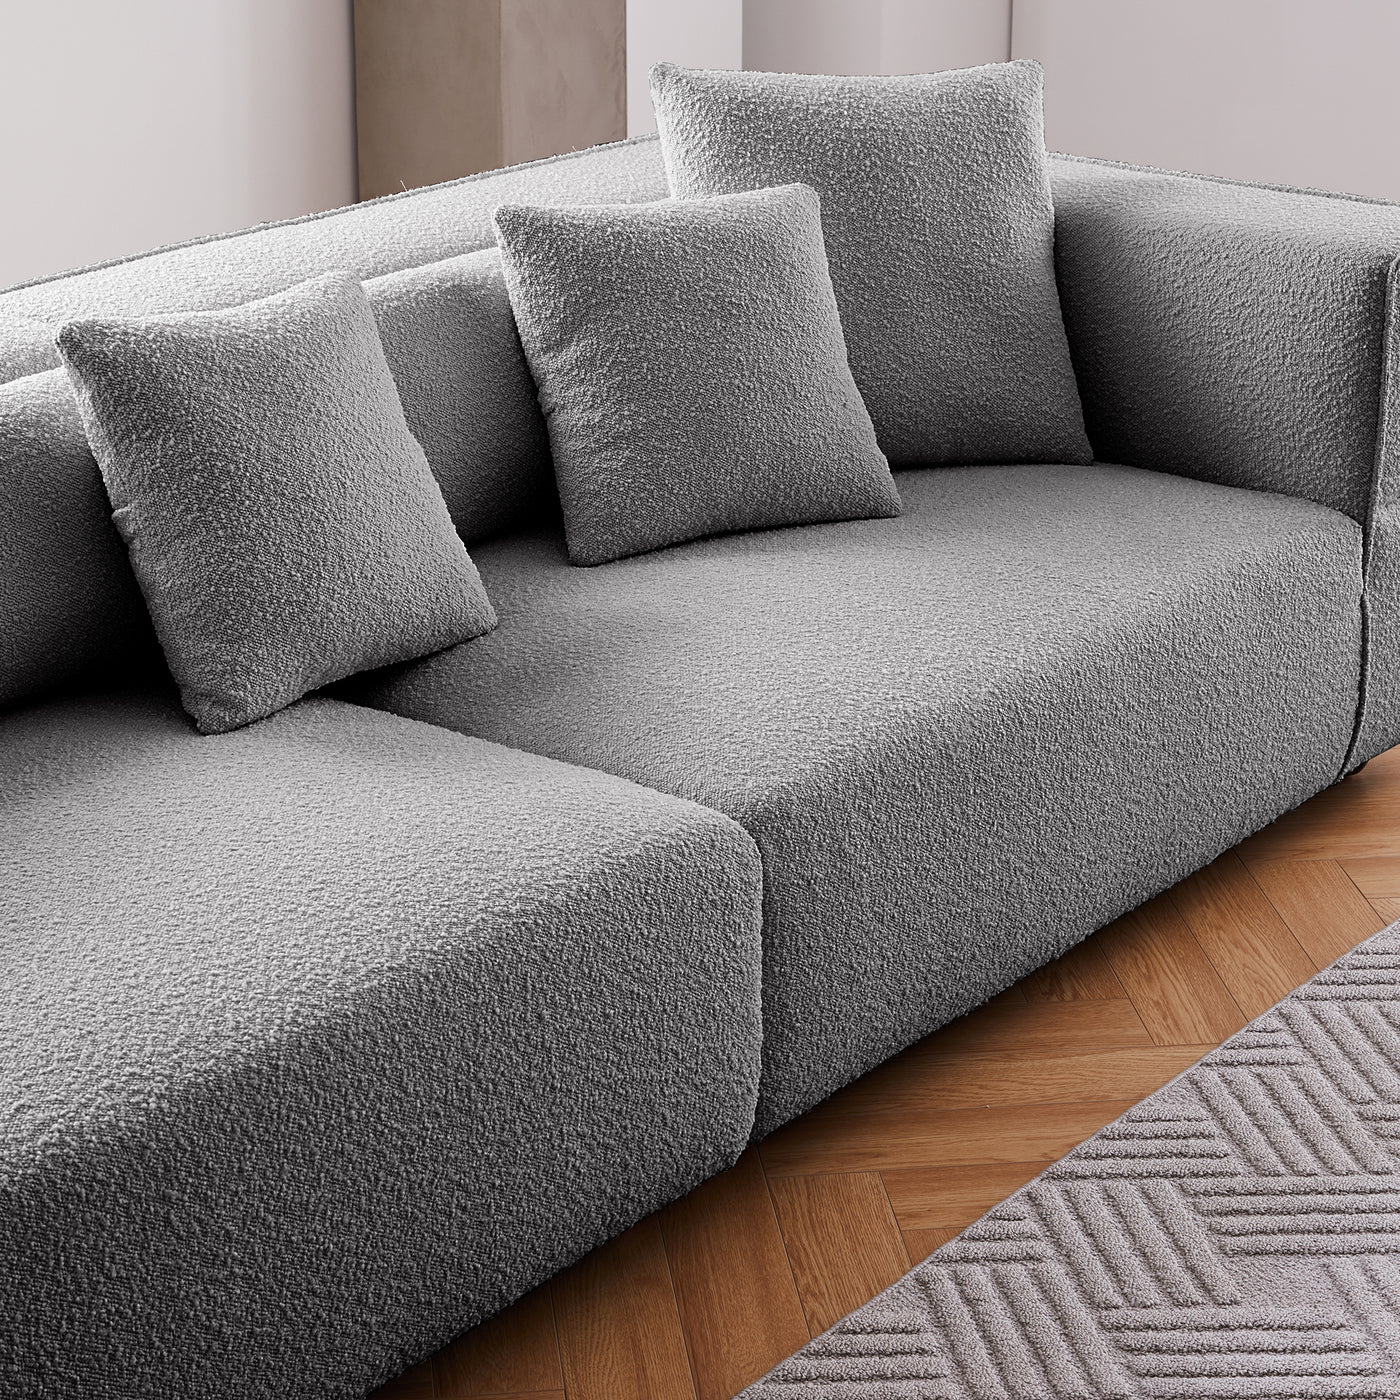 Nordic Modern Creamy Sofa-Gray